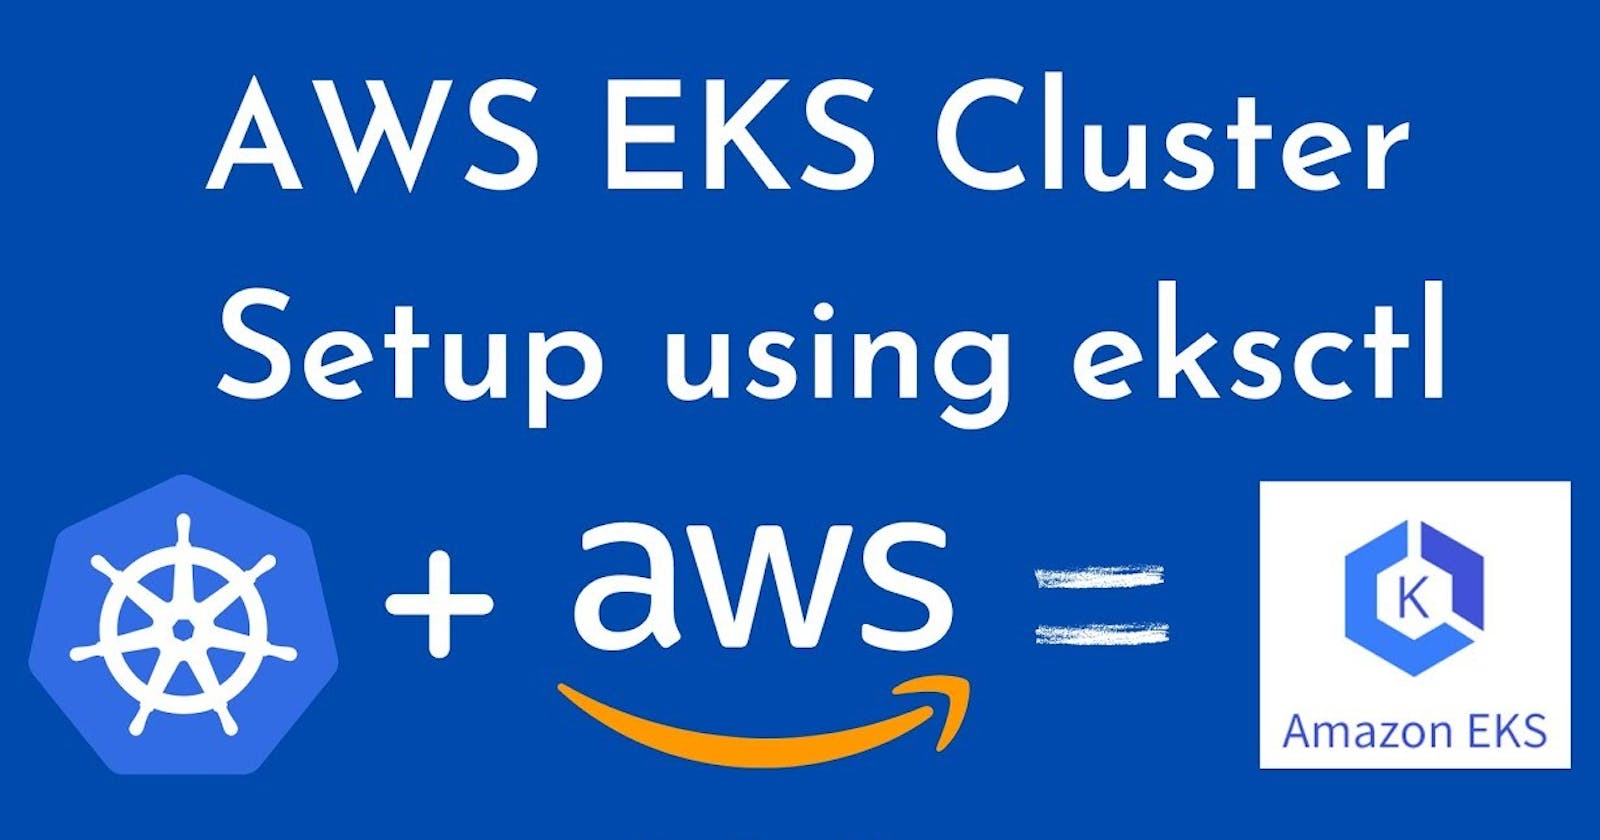 Amazon EKS Cluster Setup using eksctl